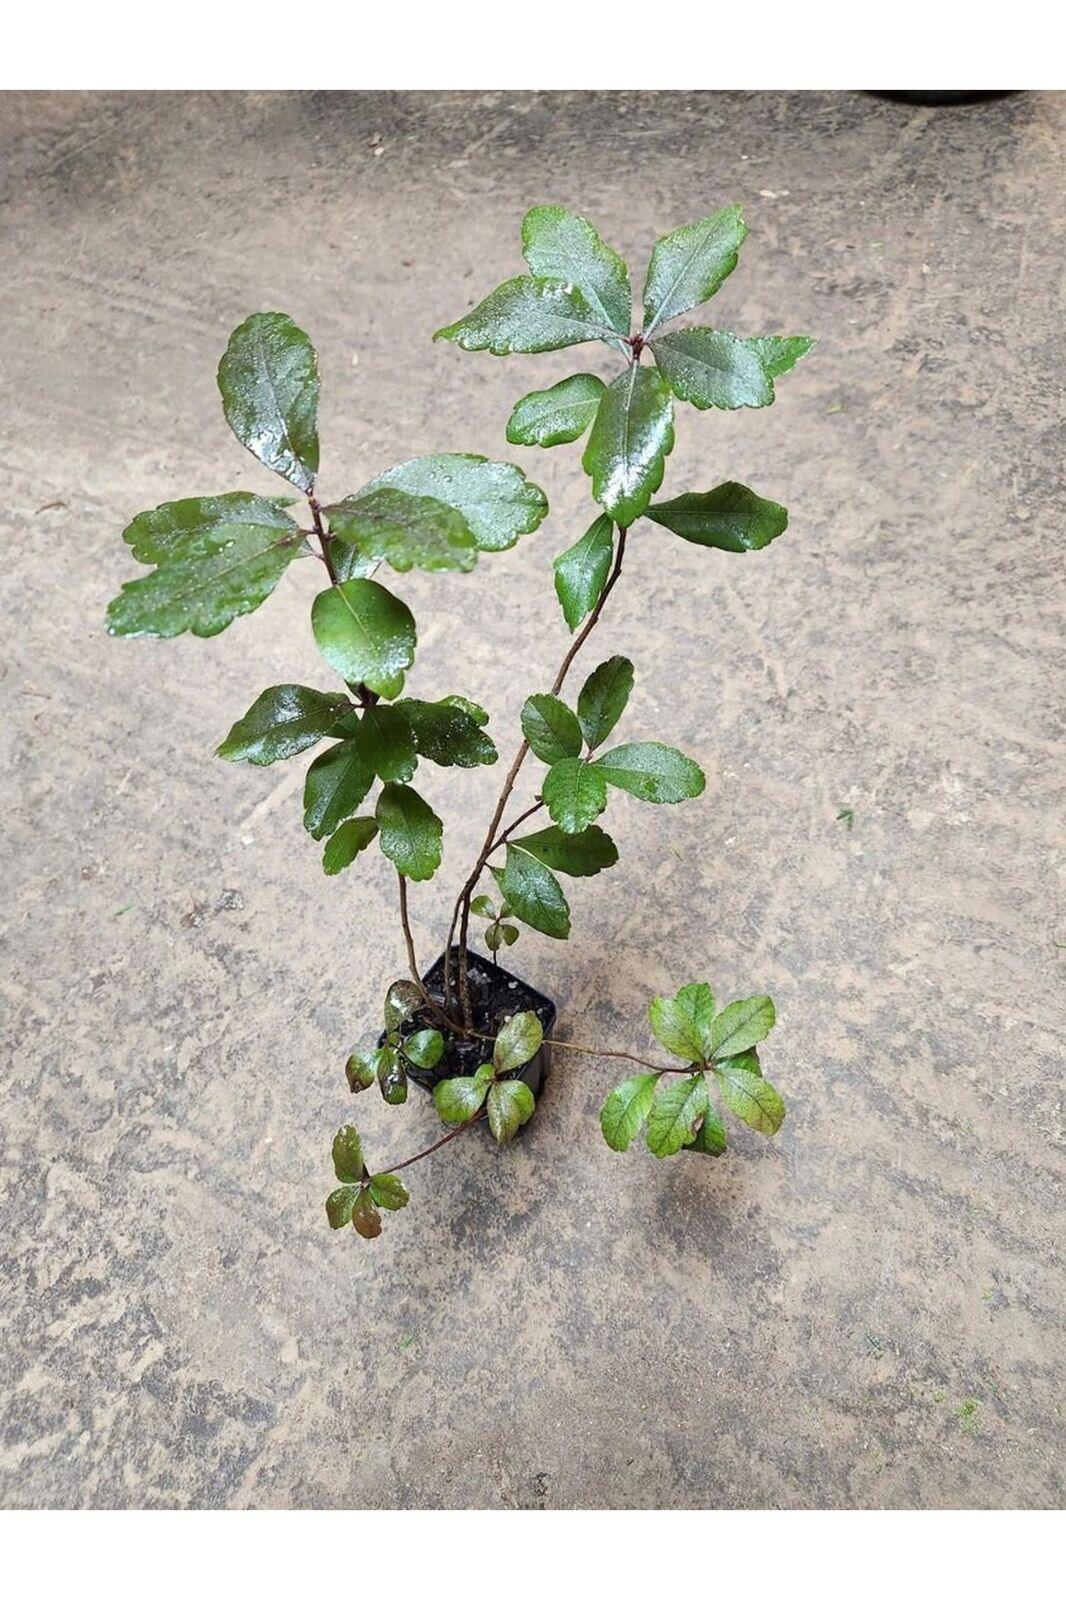 Bayberry Shrub/Bush/Hedge – 8-12" Tall Seedling – Live Plant - 4" Pot - The Nursery Center